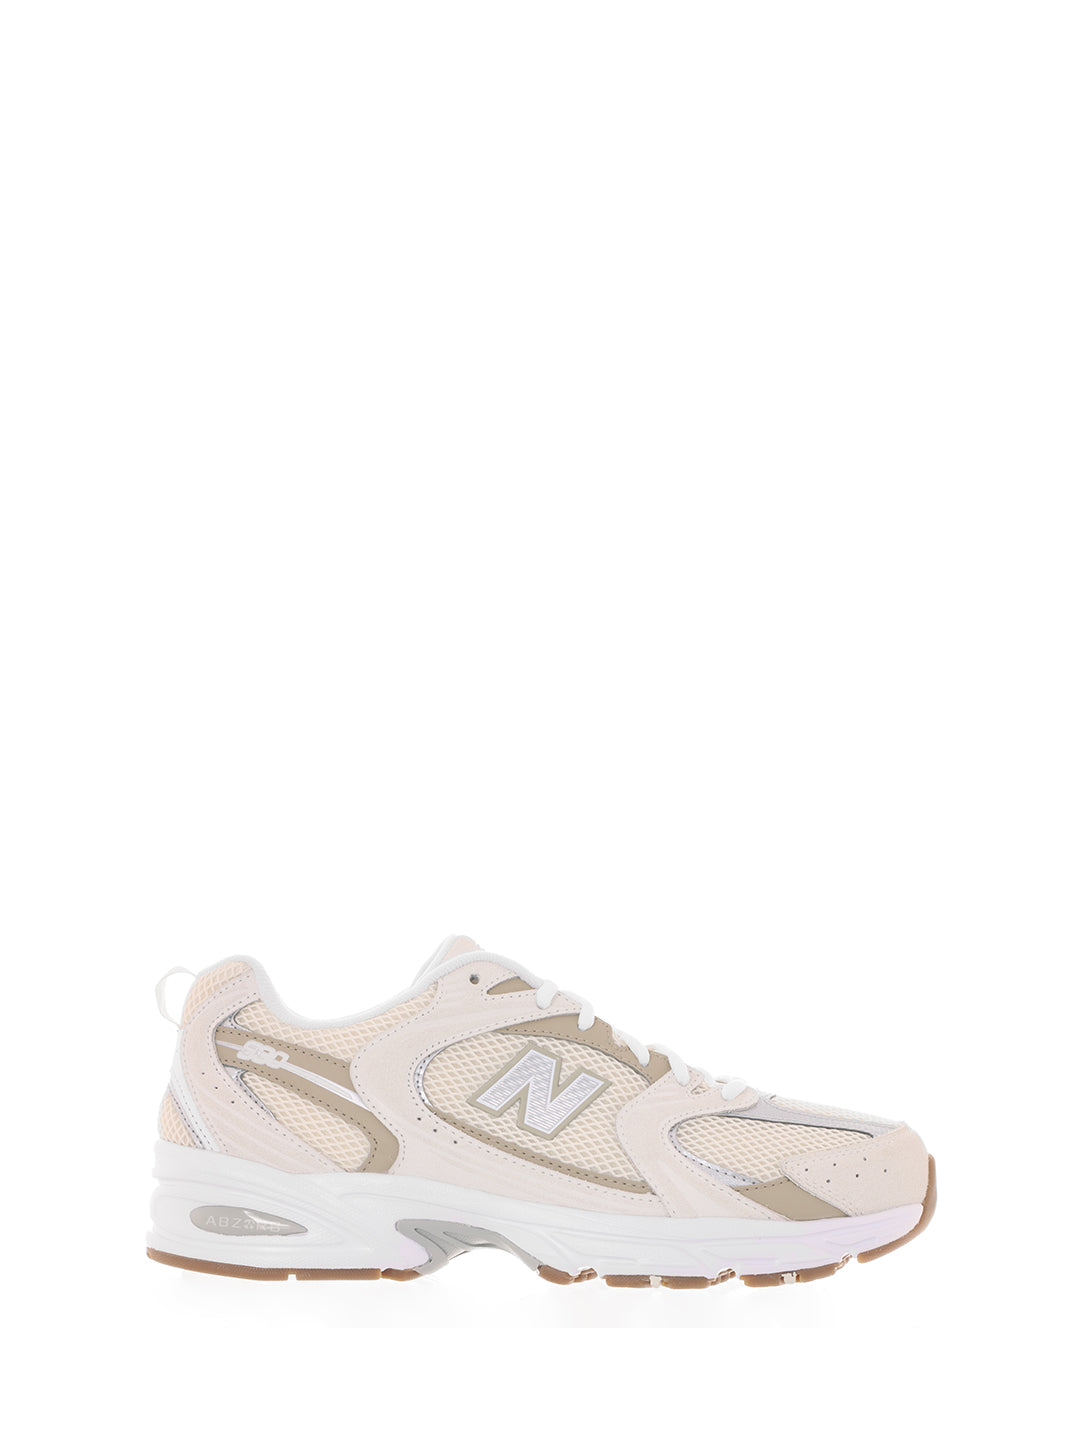 New Balance 530 sneakers beige e bianco